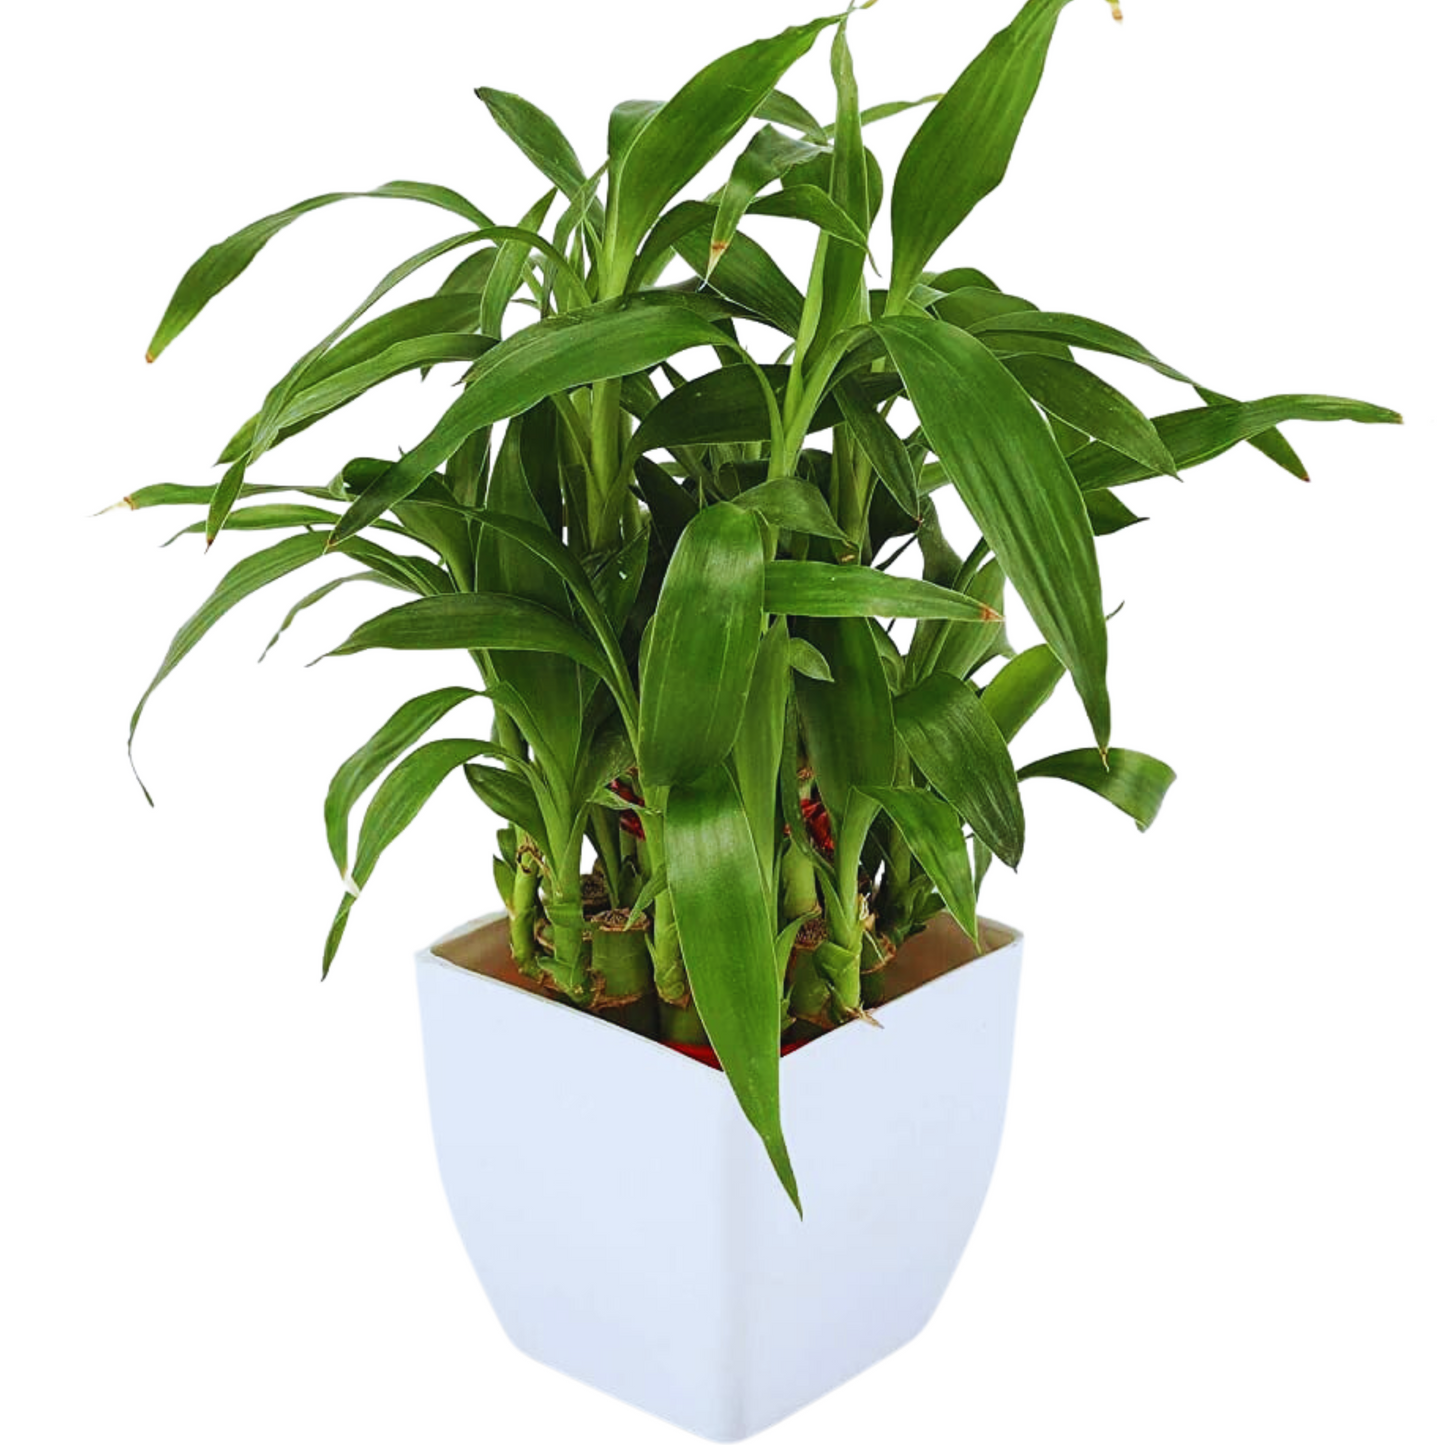 Good Luck -Household Plant (Syngonium & Bamboo)